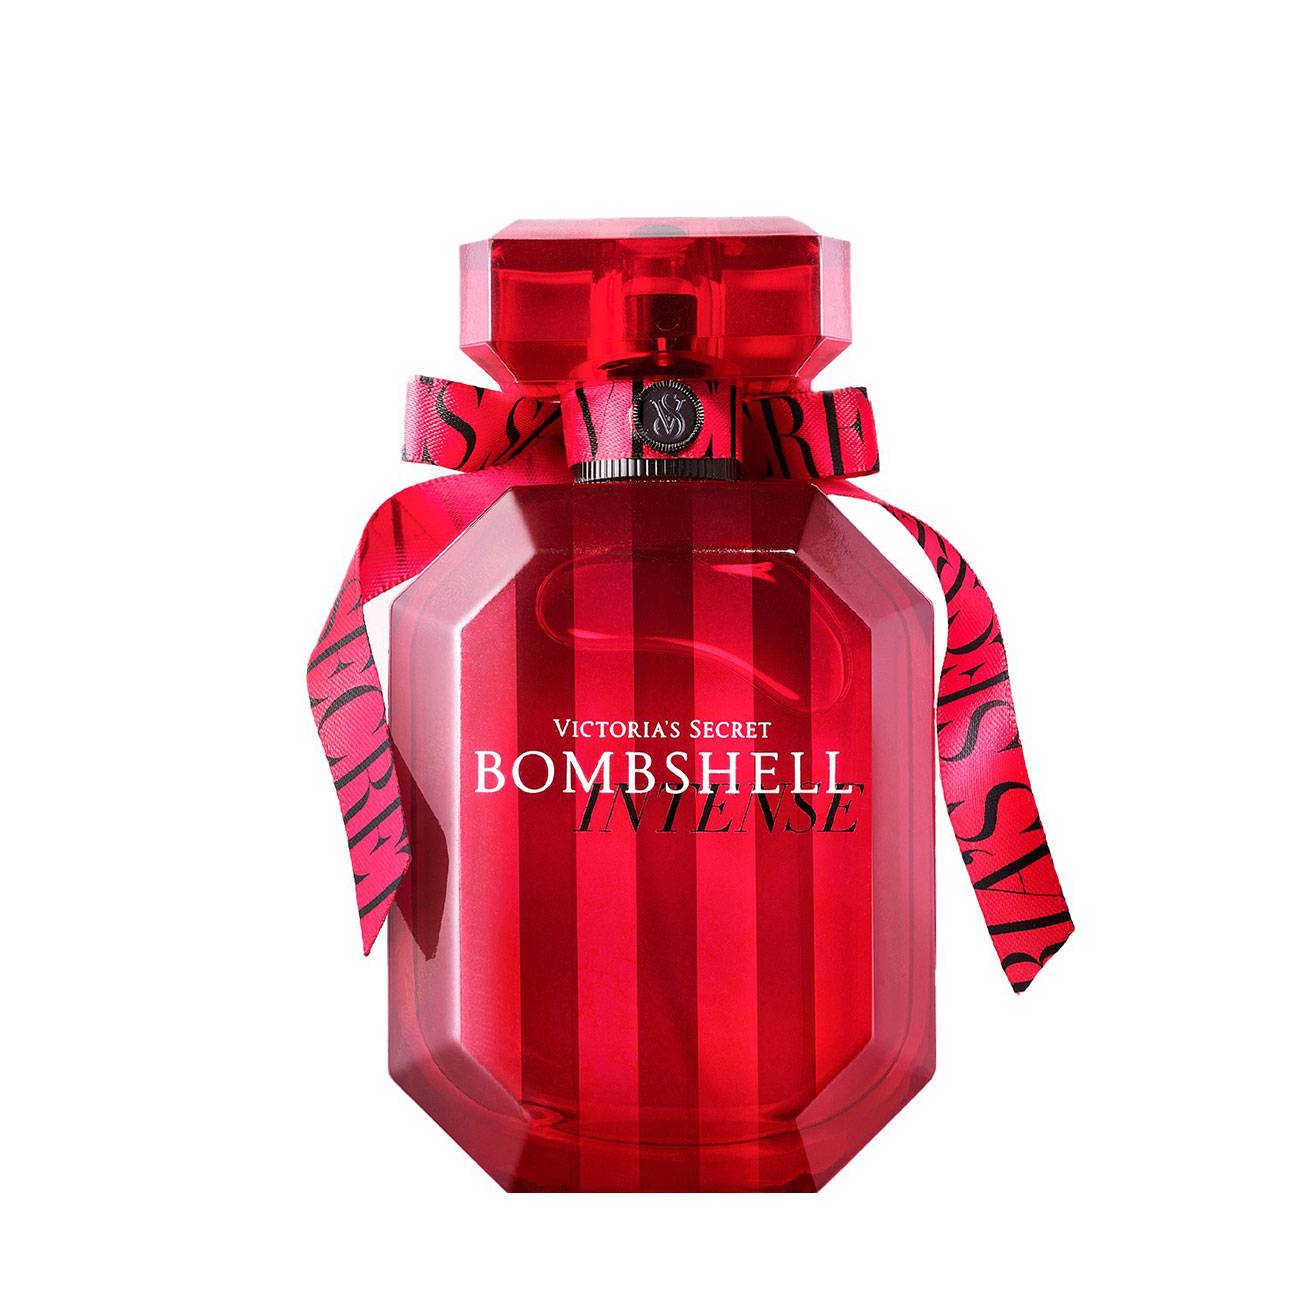 Apa de Parfum Victoria's Secret BOMBSHELL INTENSE 100ml cu comanda online